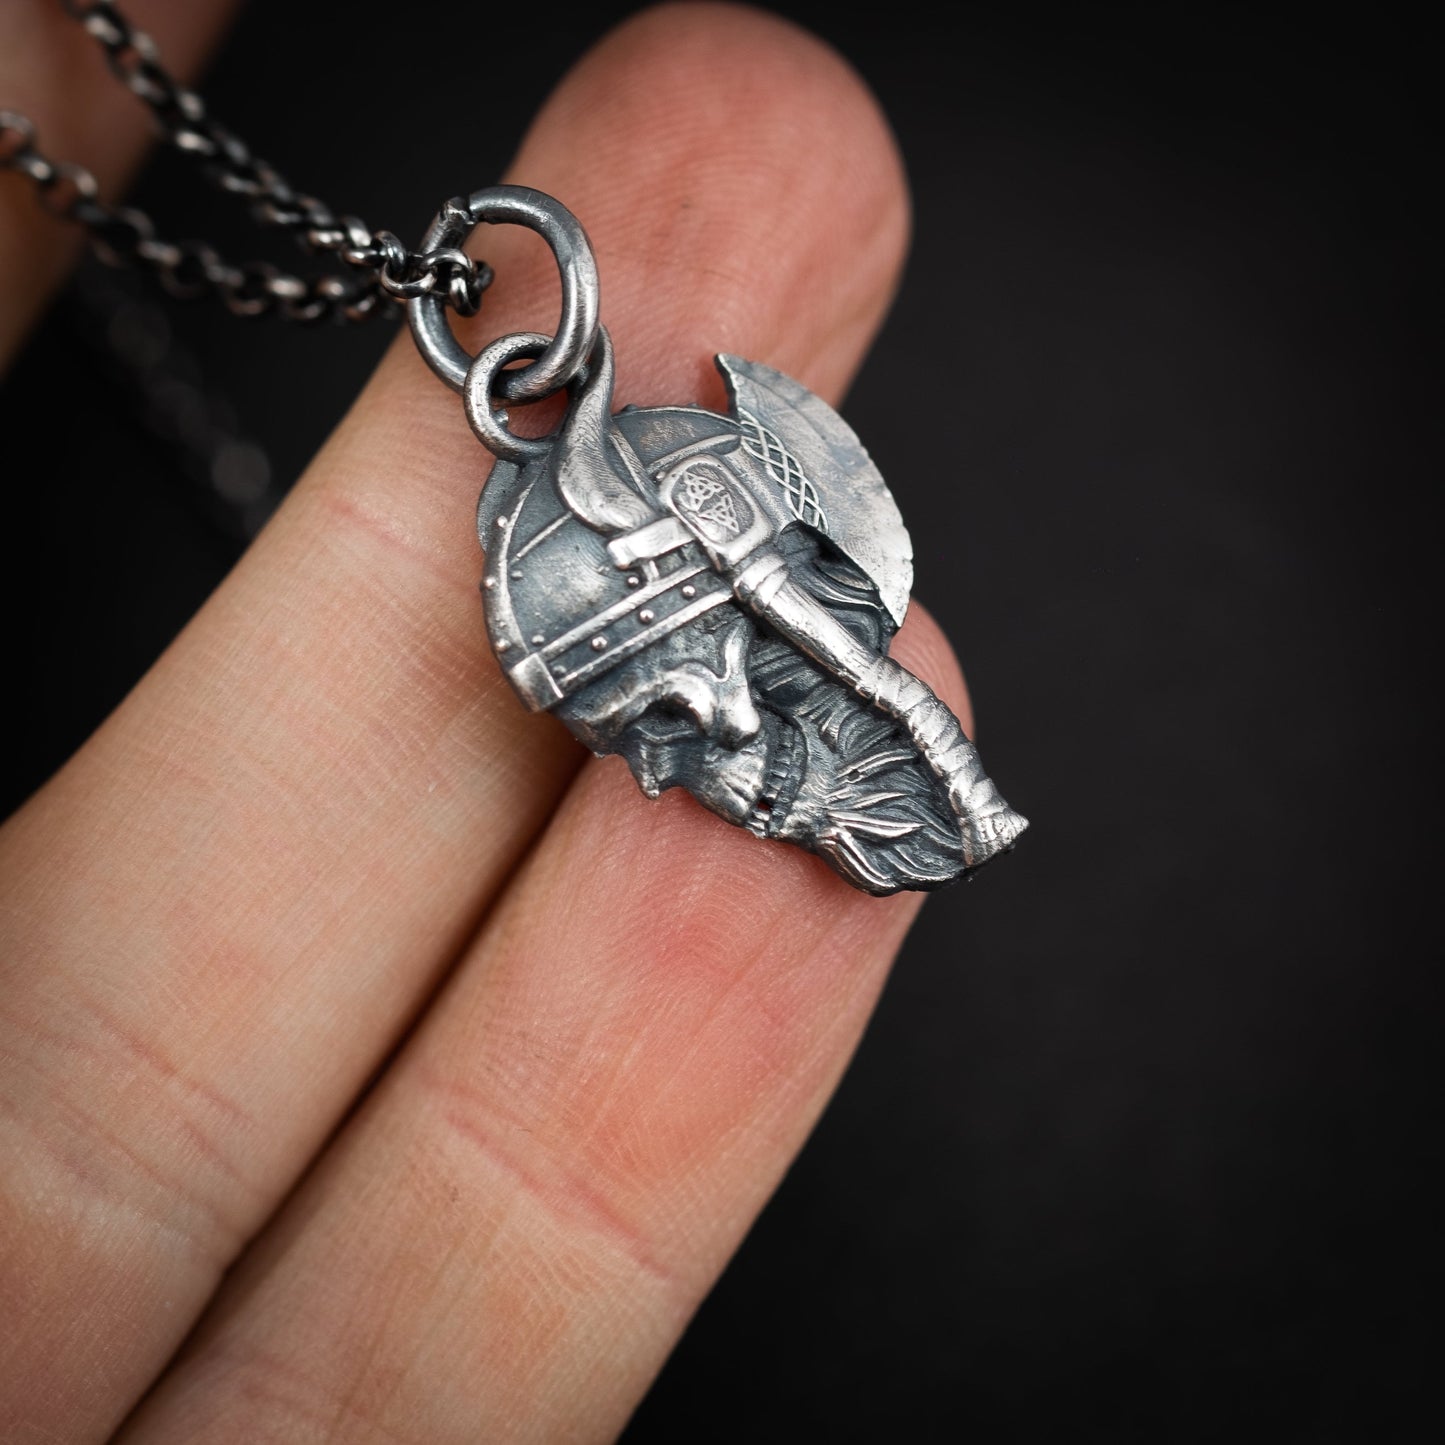 Silver Viking Warrior Necklace, Men skull memento mori necklace, Norse Mythology, Strength necklace, Handmade jewelry, rustic pendant